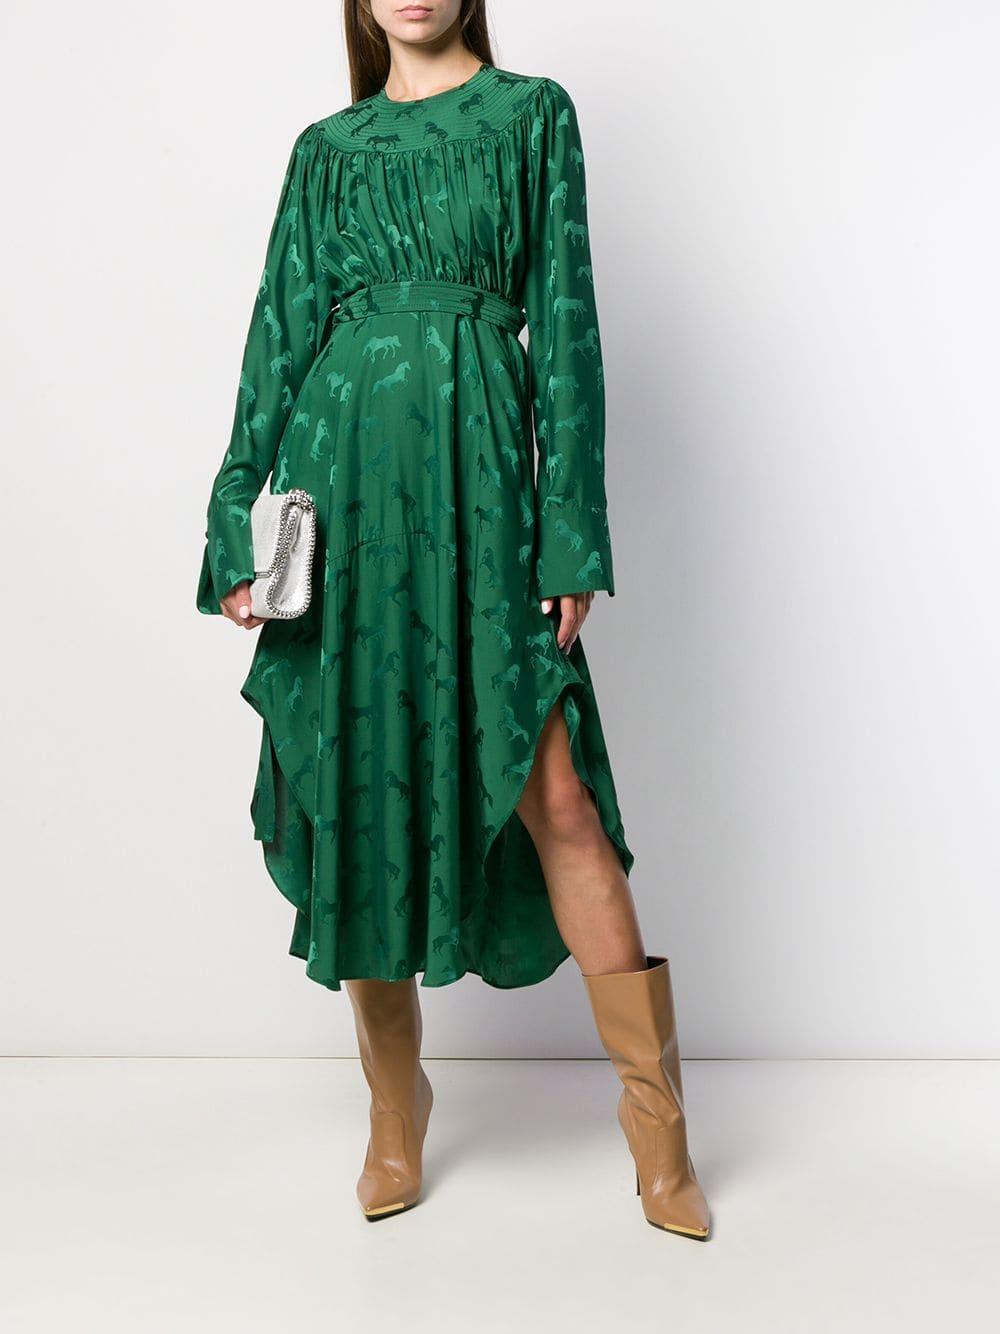 Stella McCartney Horses Jacquard Midi Dress in Green | Lyst